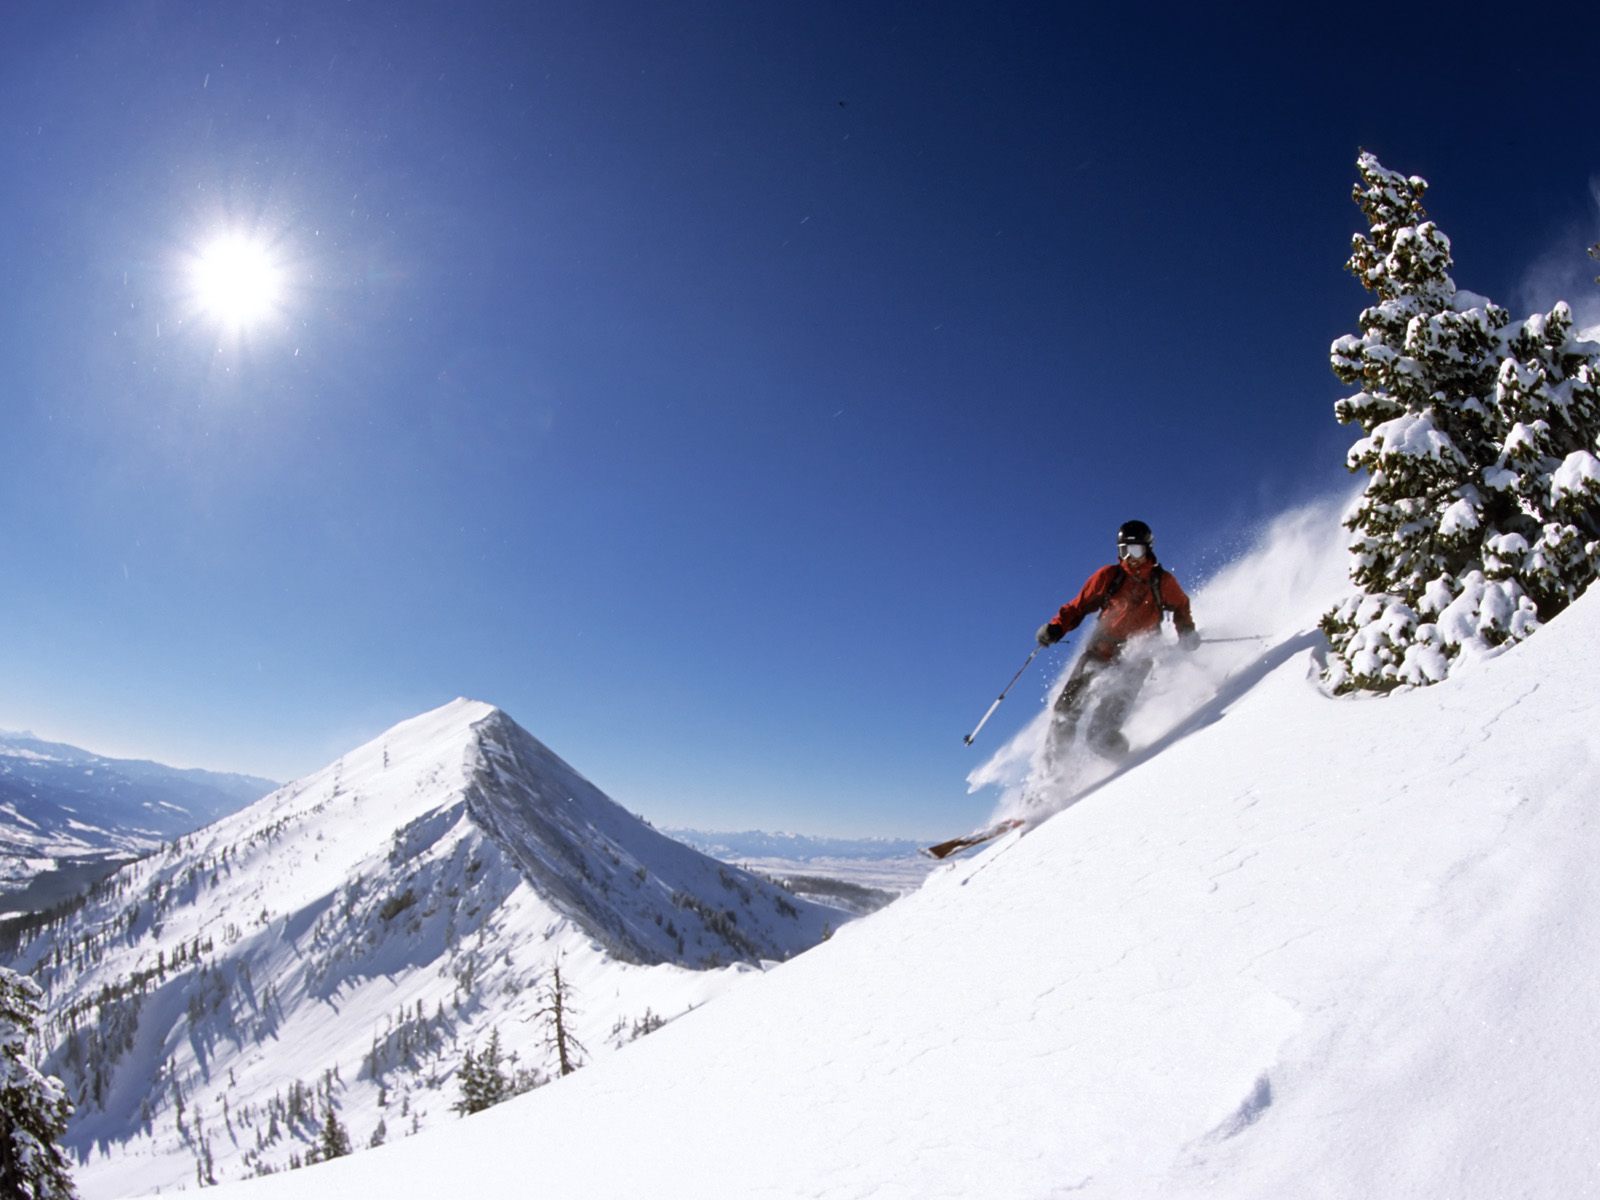 Skiing In The Bridger Mountains Montana Sports Photography Desktop